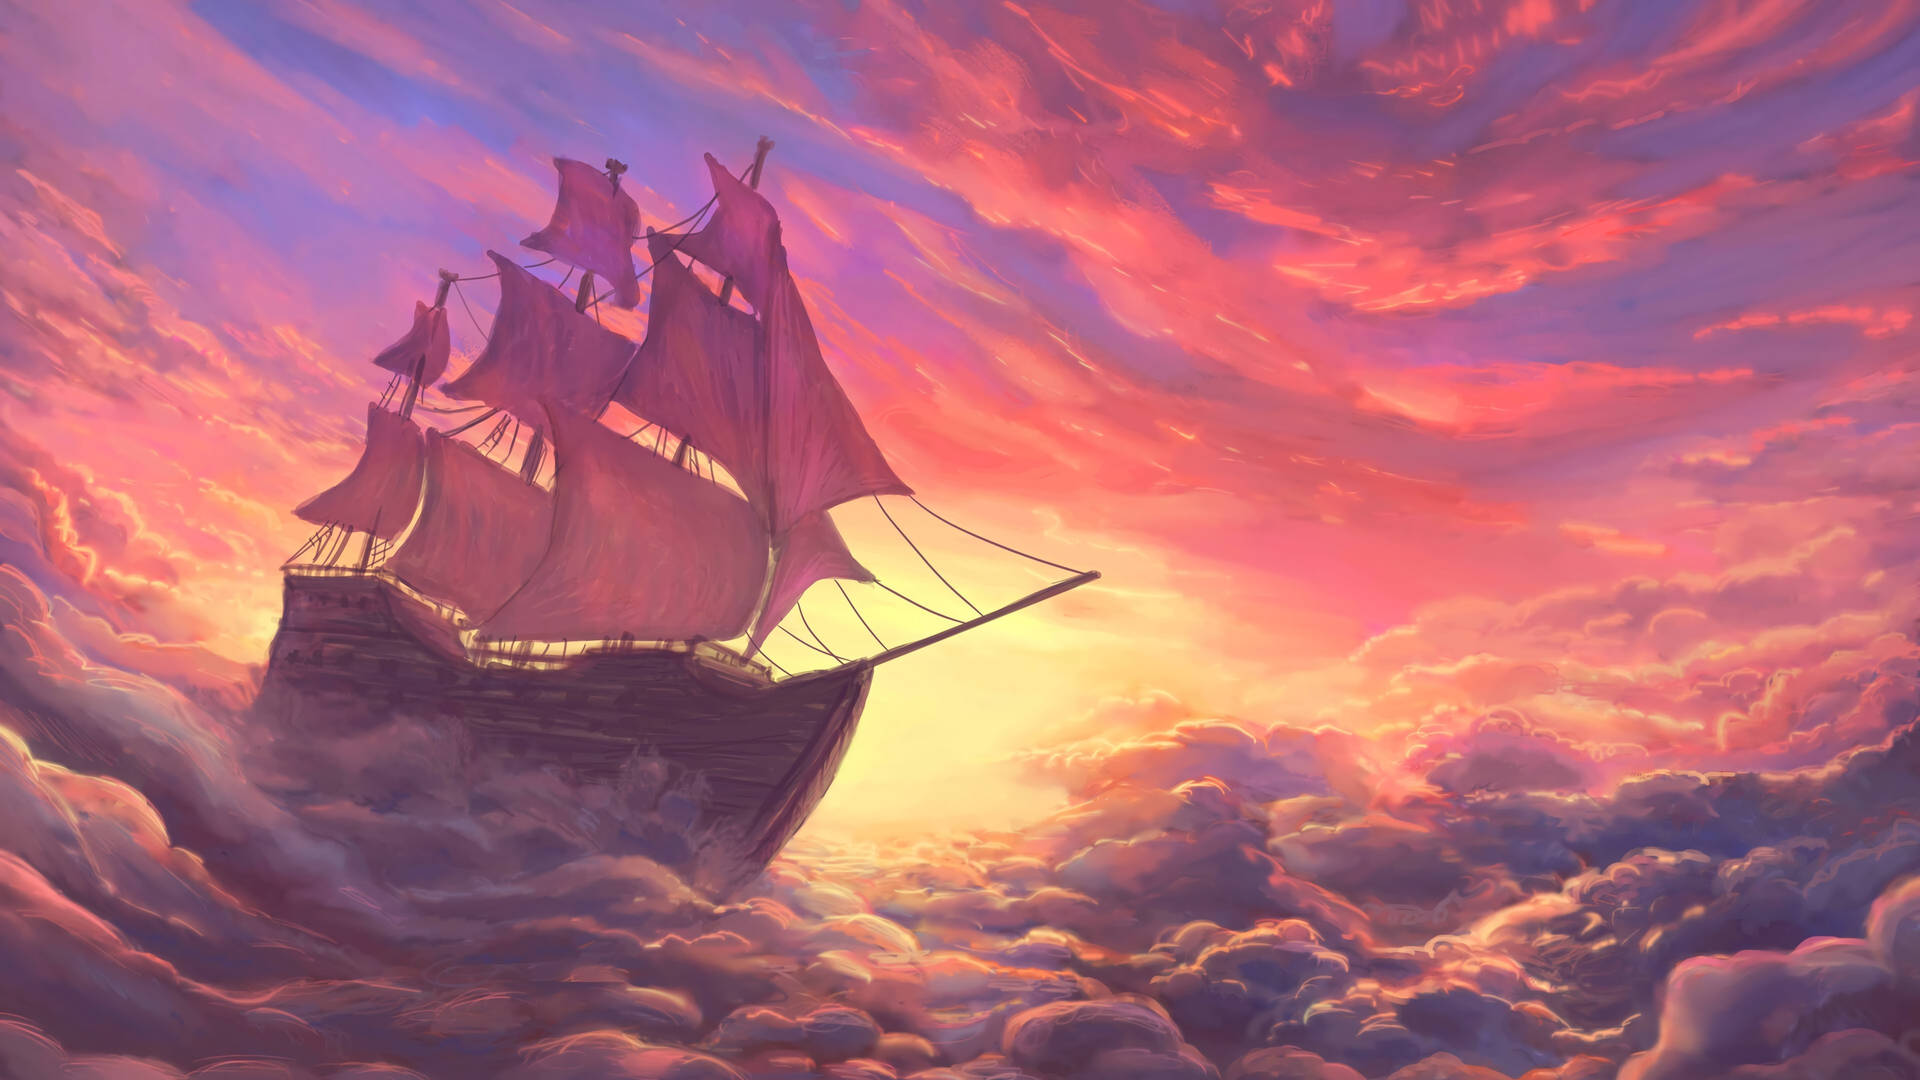 Pink Aesthetic Pirate Ship Wallpaper